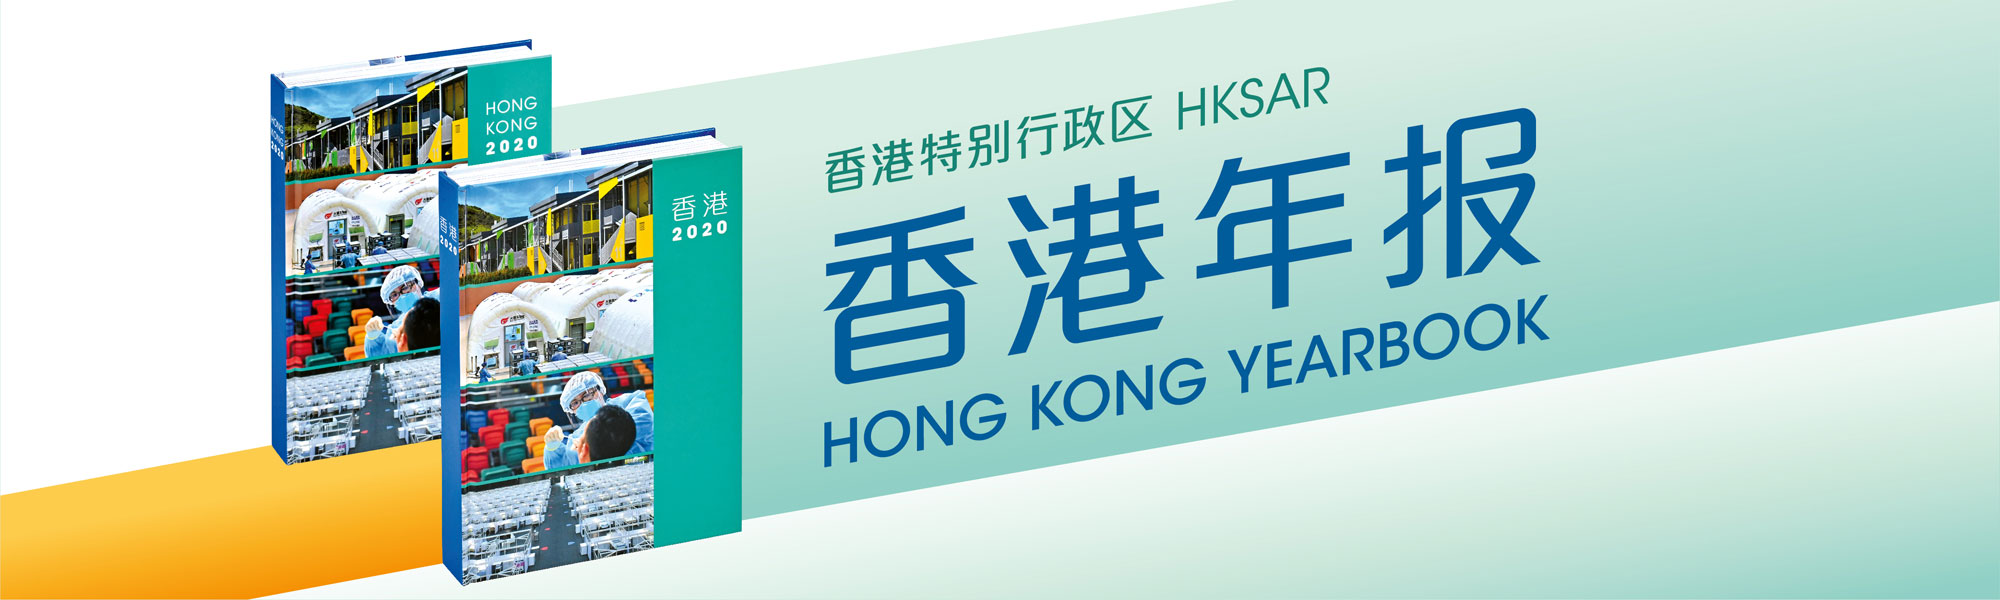 香港年报 Hong Kong Yearbook